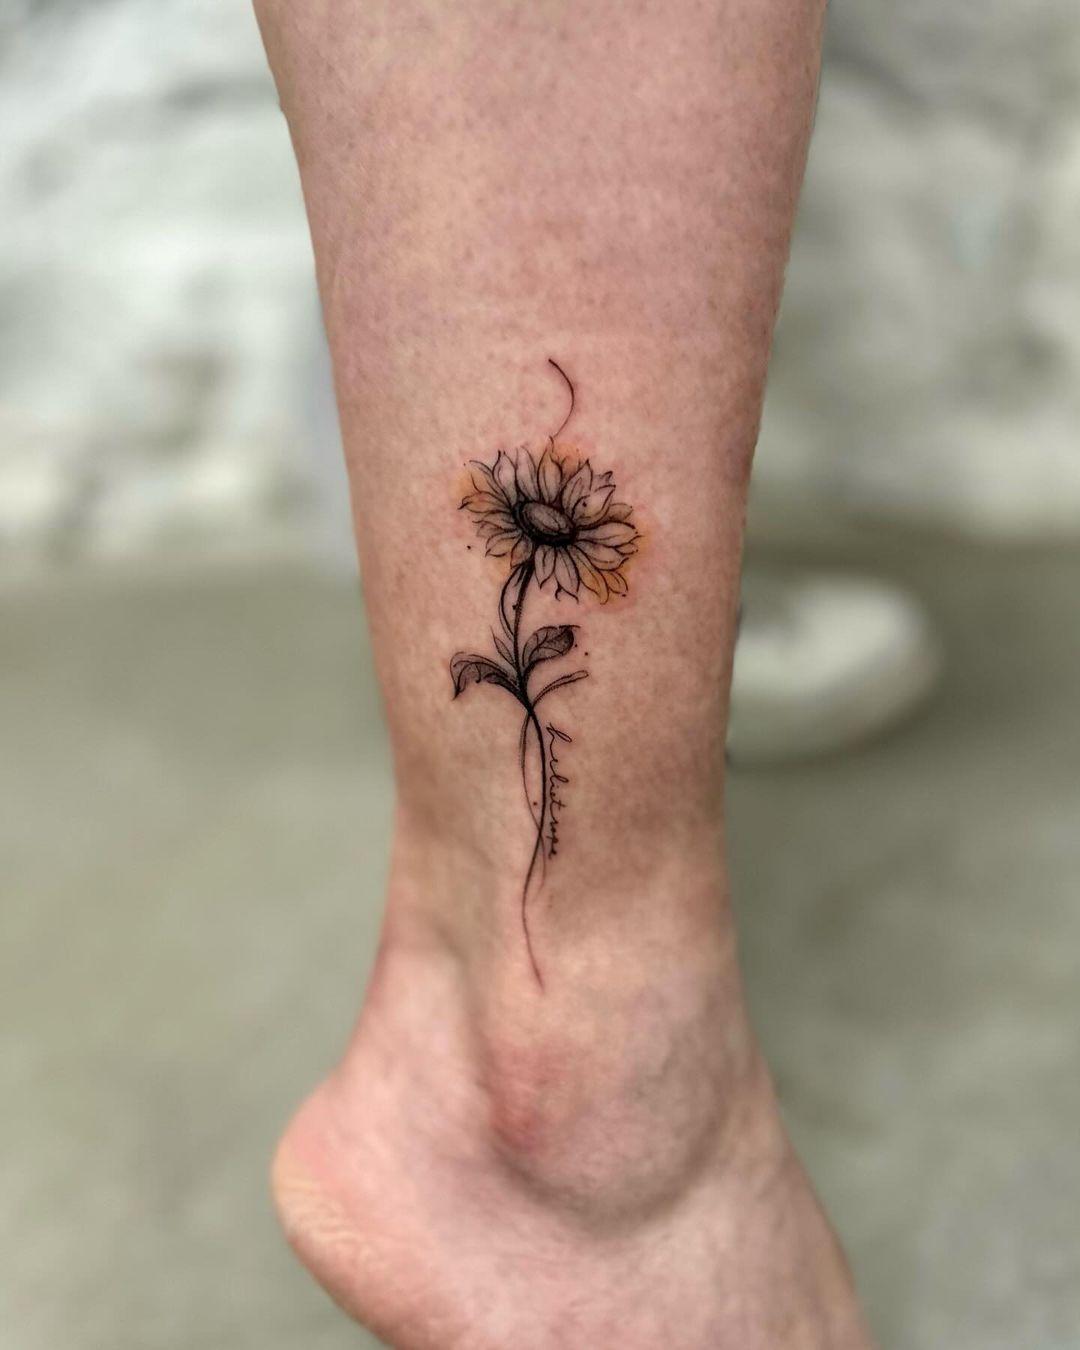 Ankle sunflower tattoo